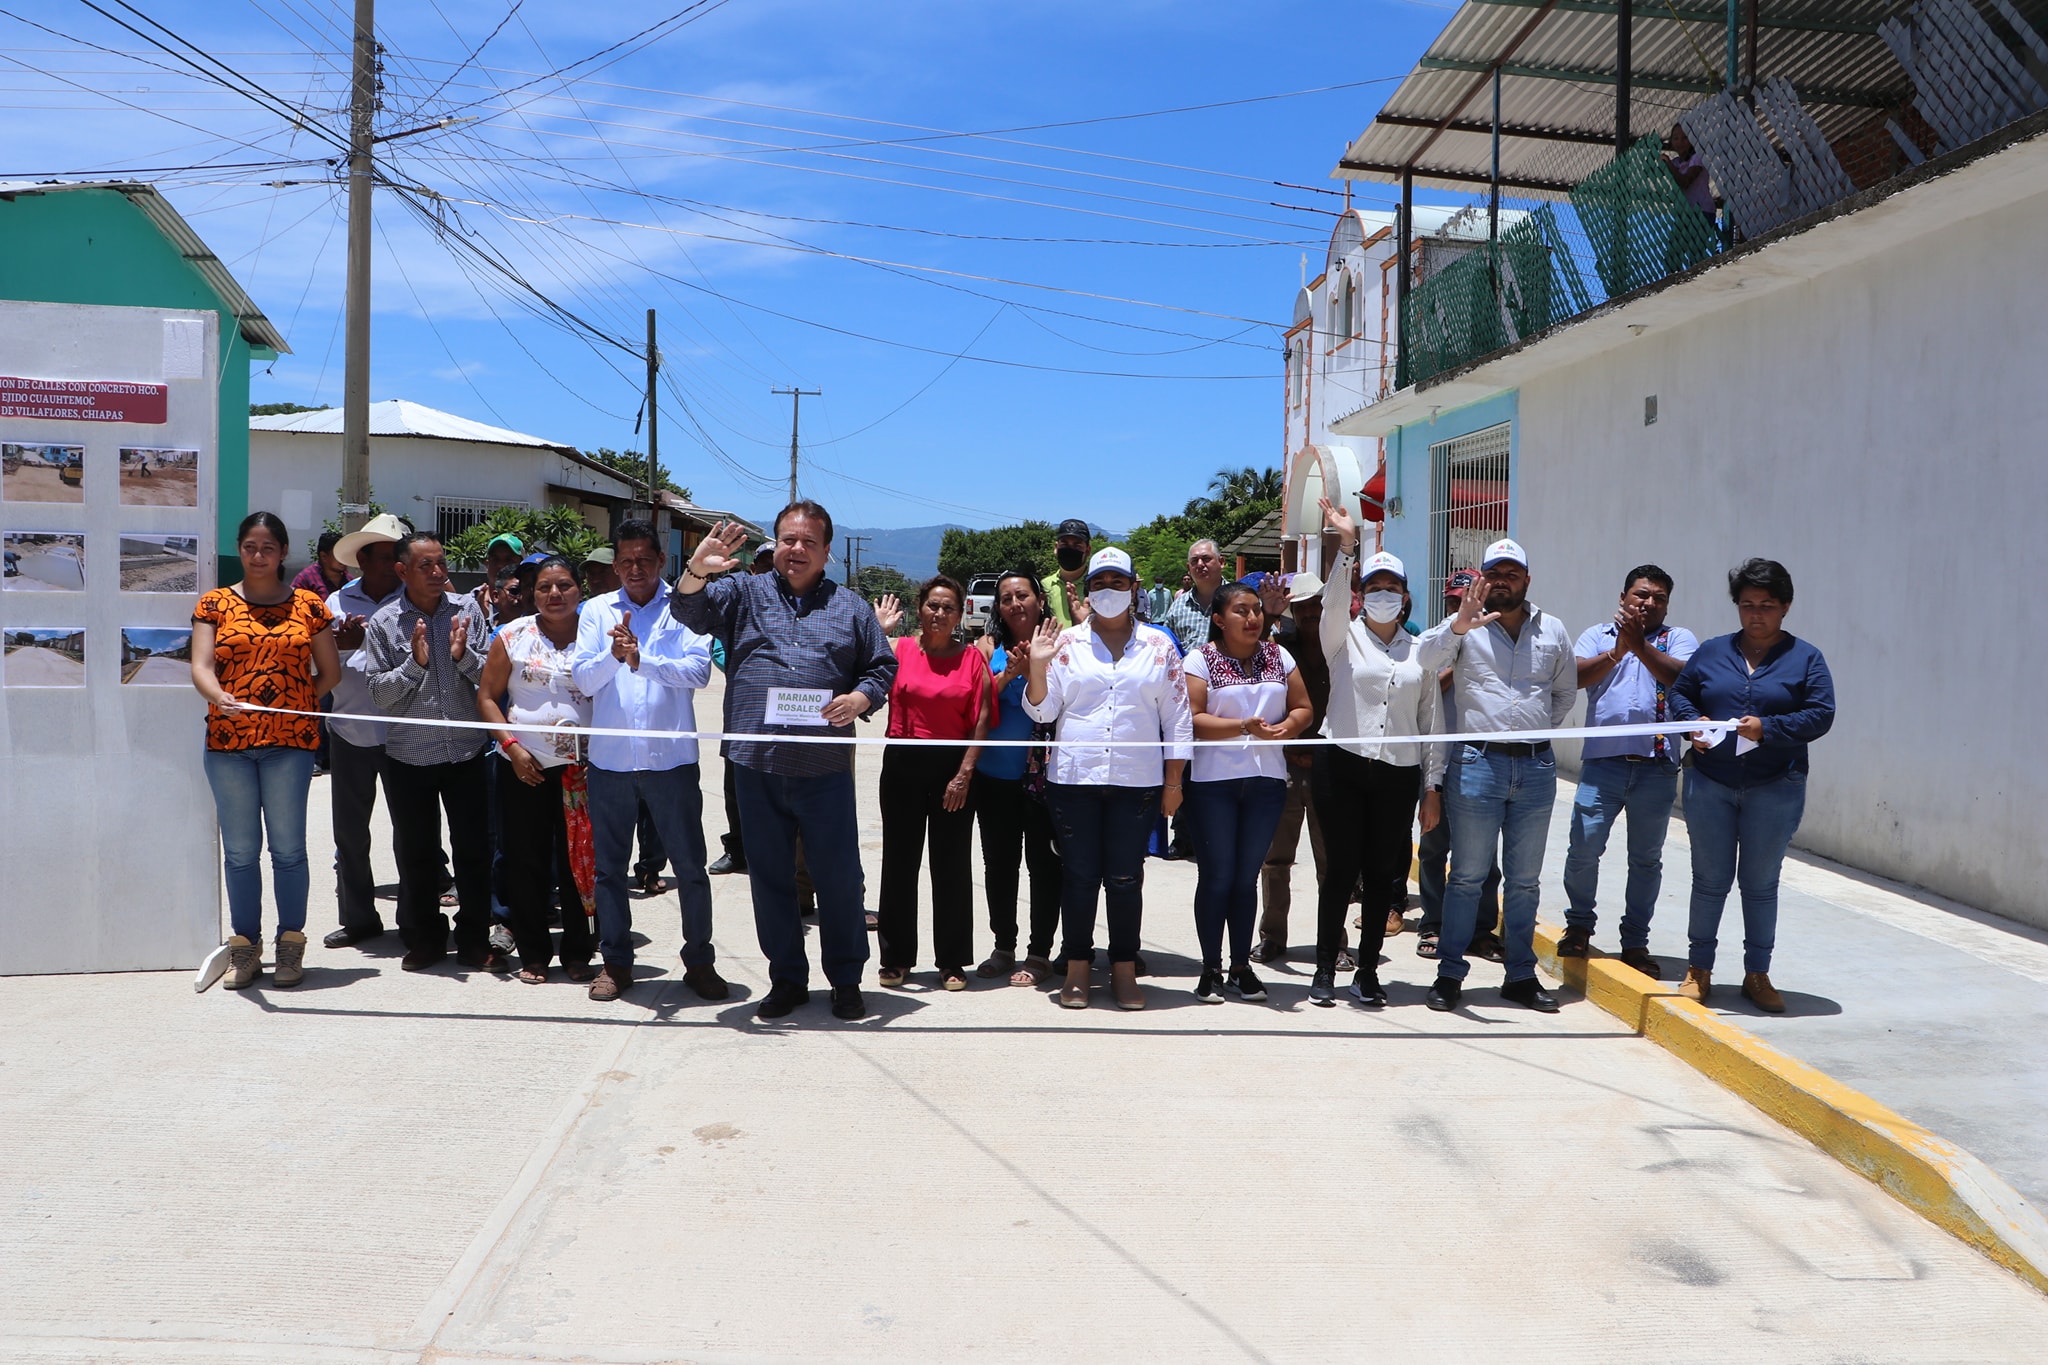 Alcalde Mariano Rosales Zuarth inaugura pavimentación calles en ejido Cuauhtémoc